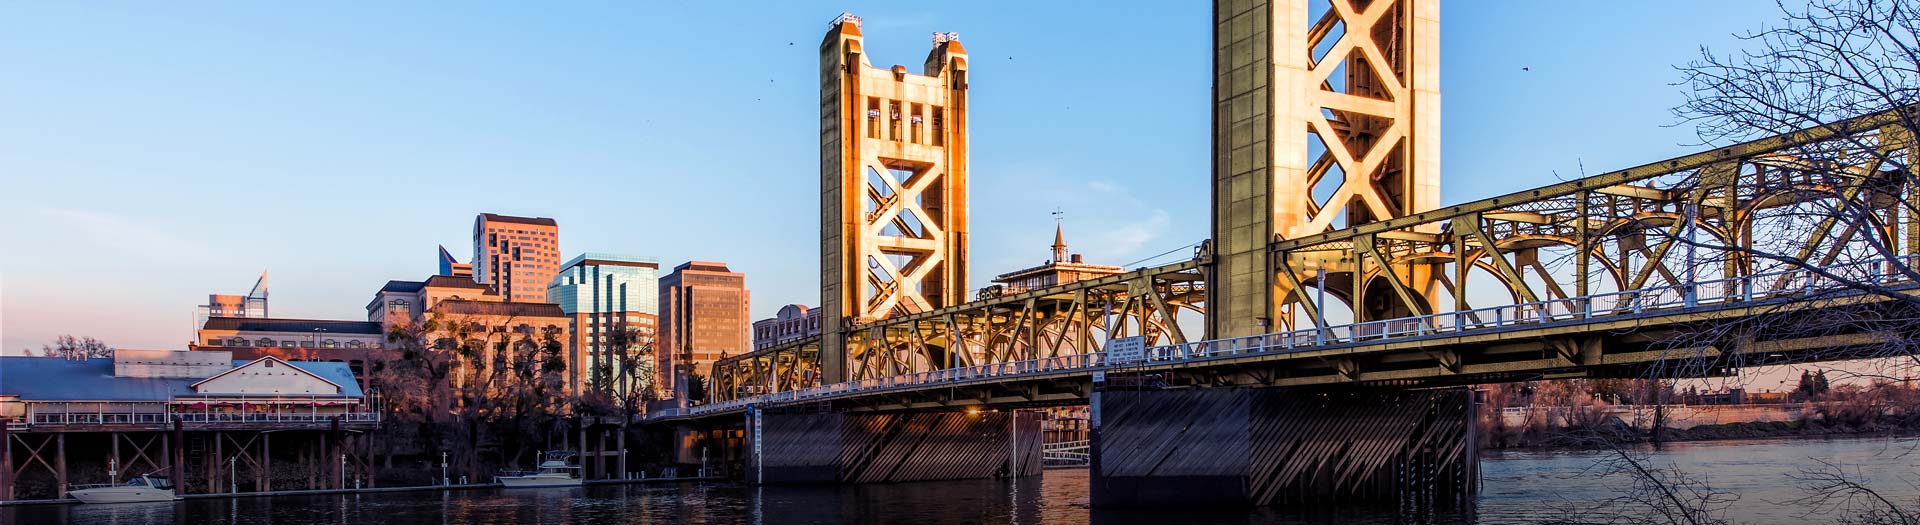 Sacramento bridge in the day time